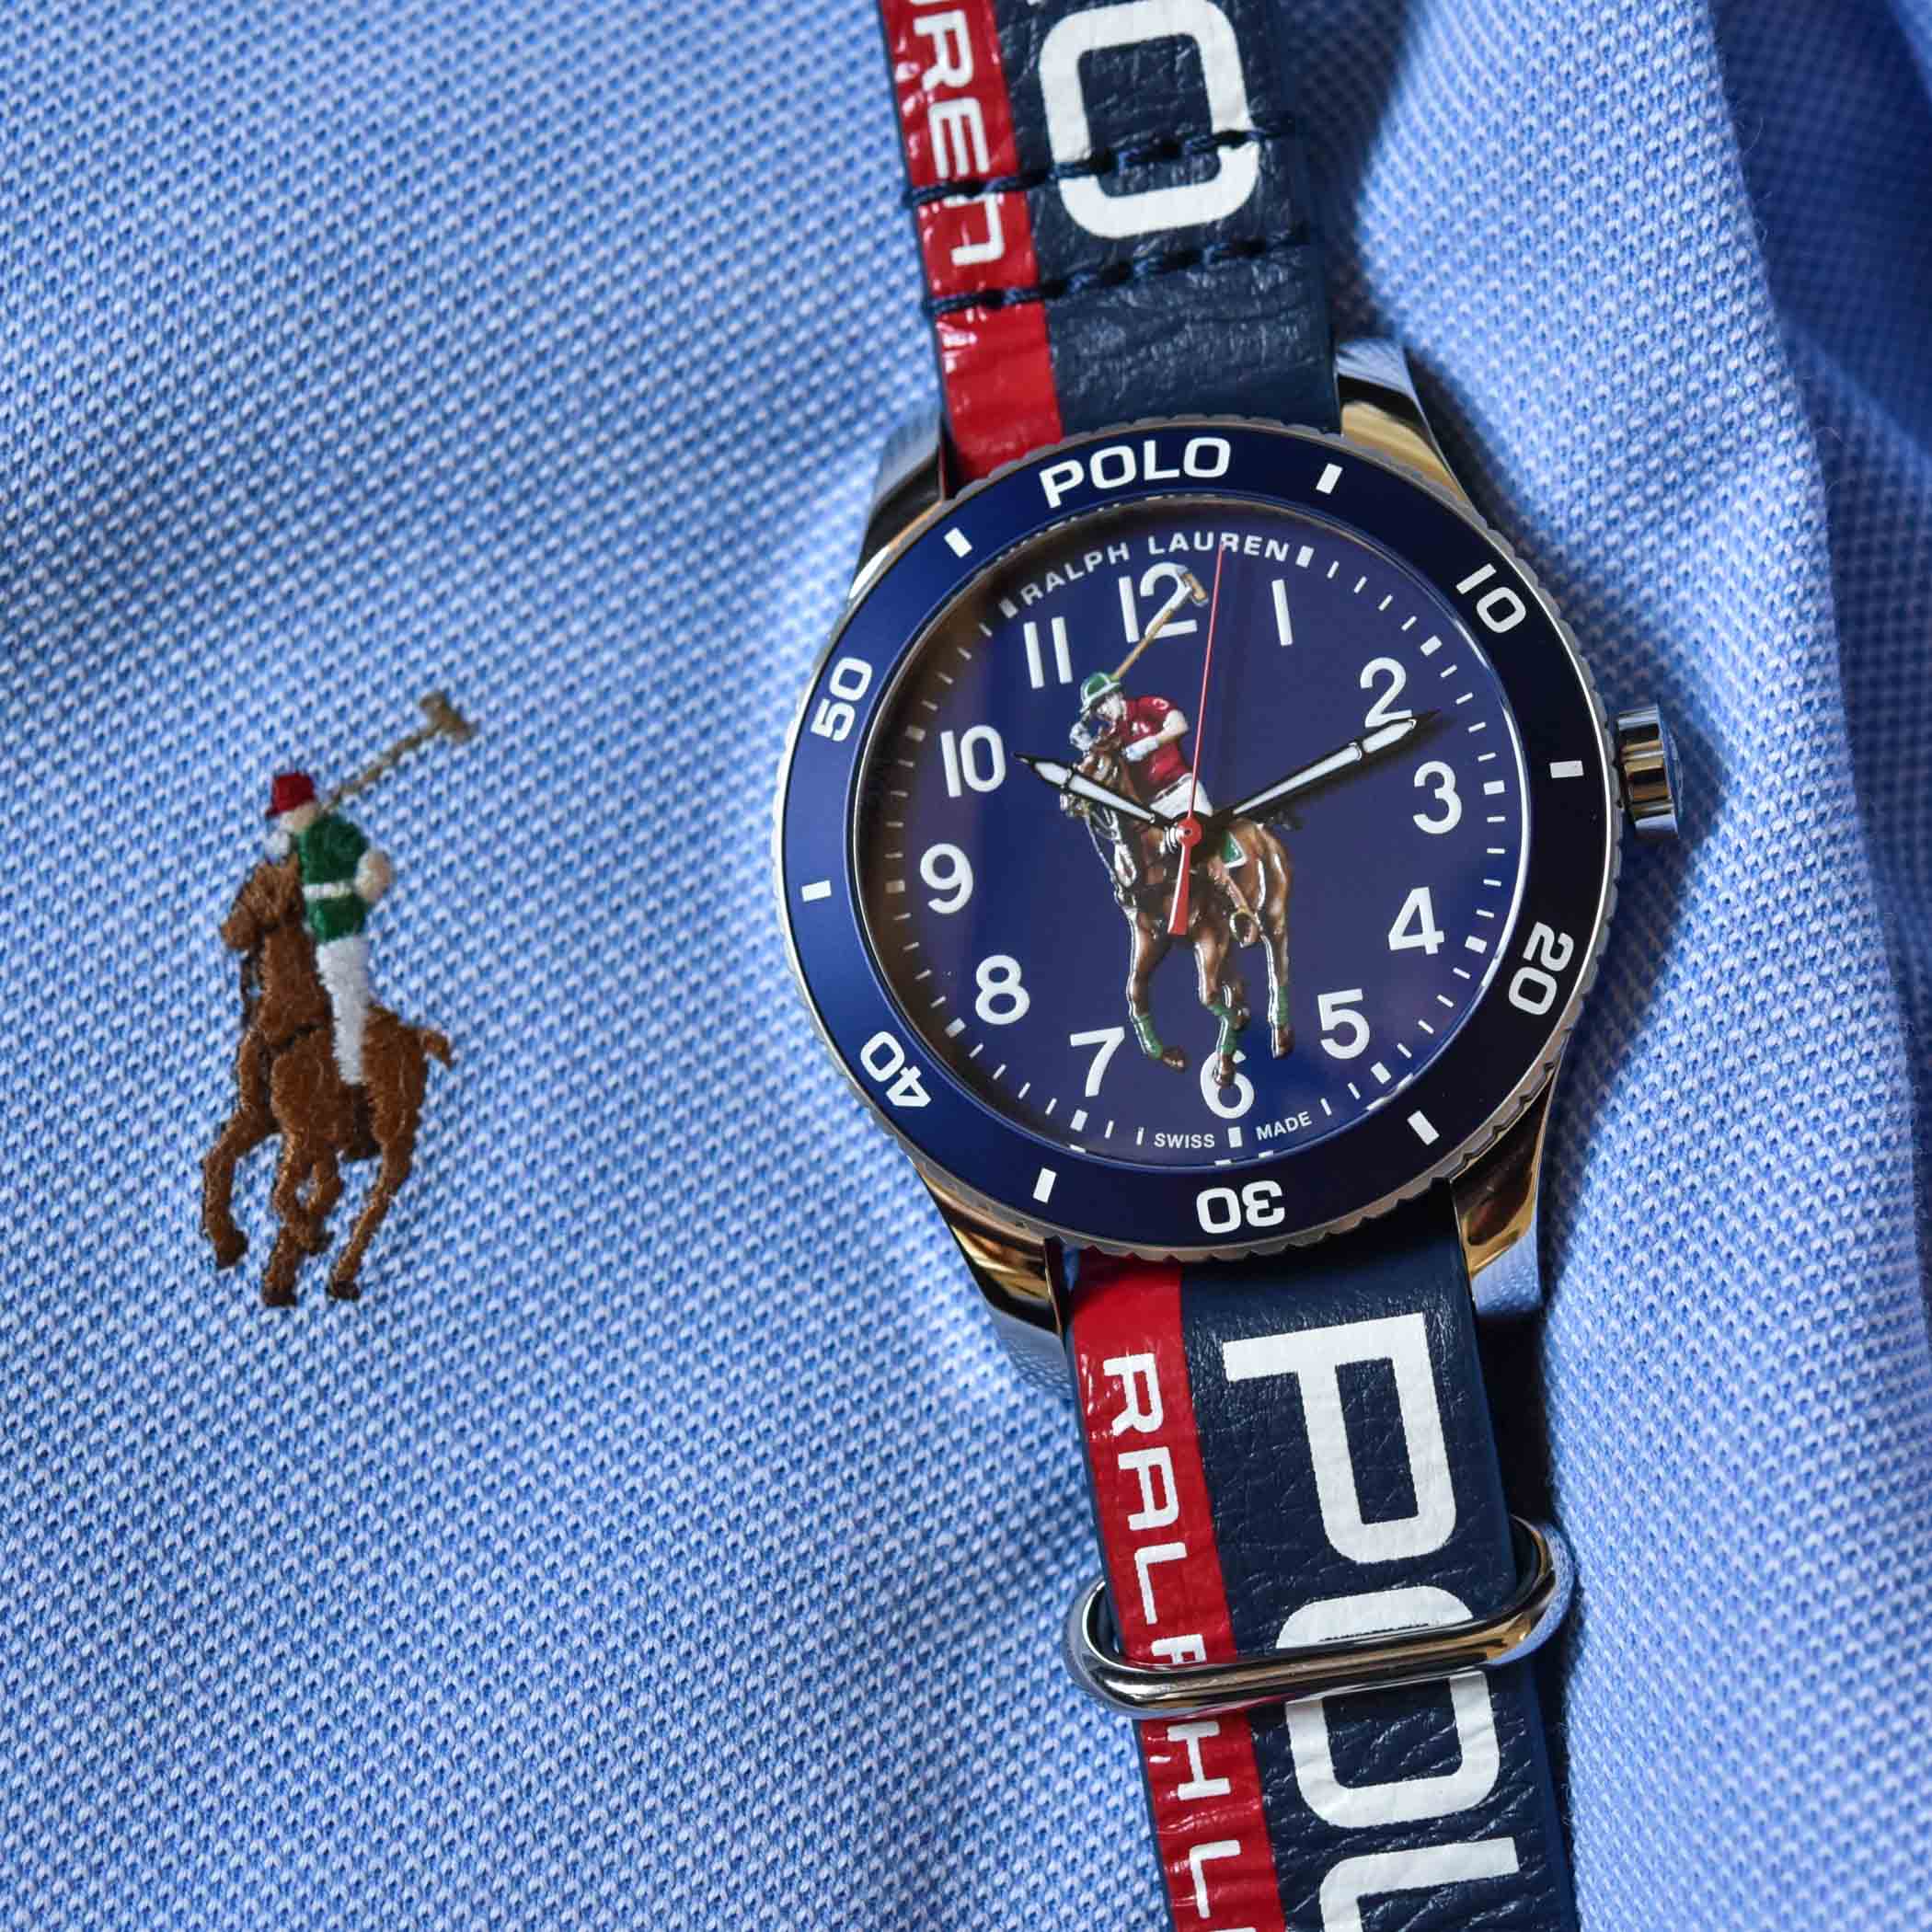 2020 Ralph Lauren Polo Watch Collection